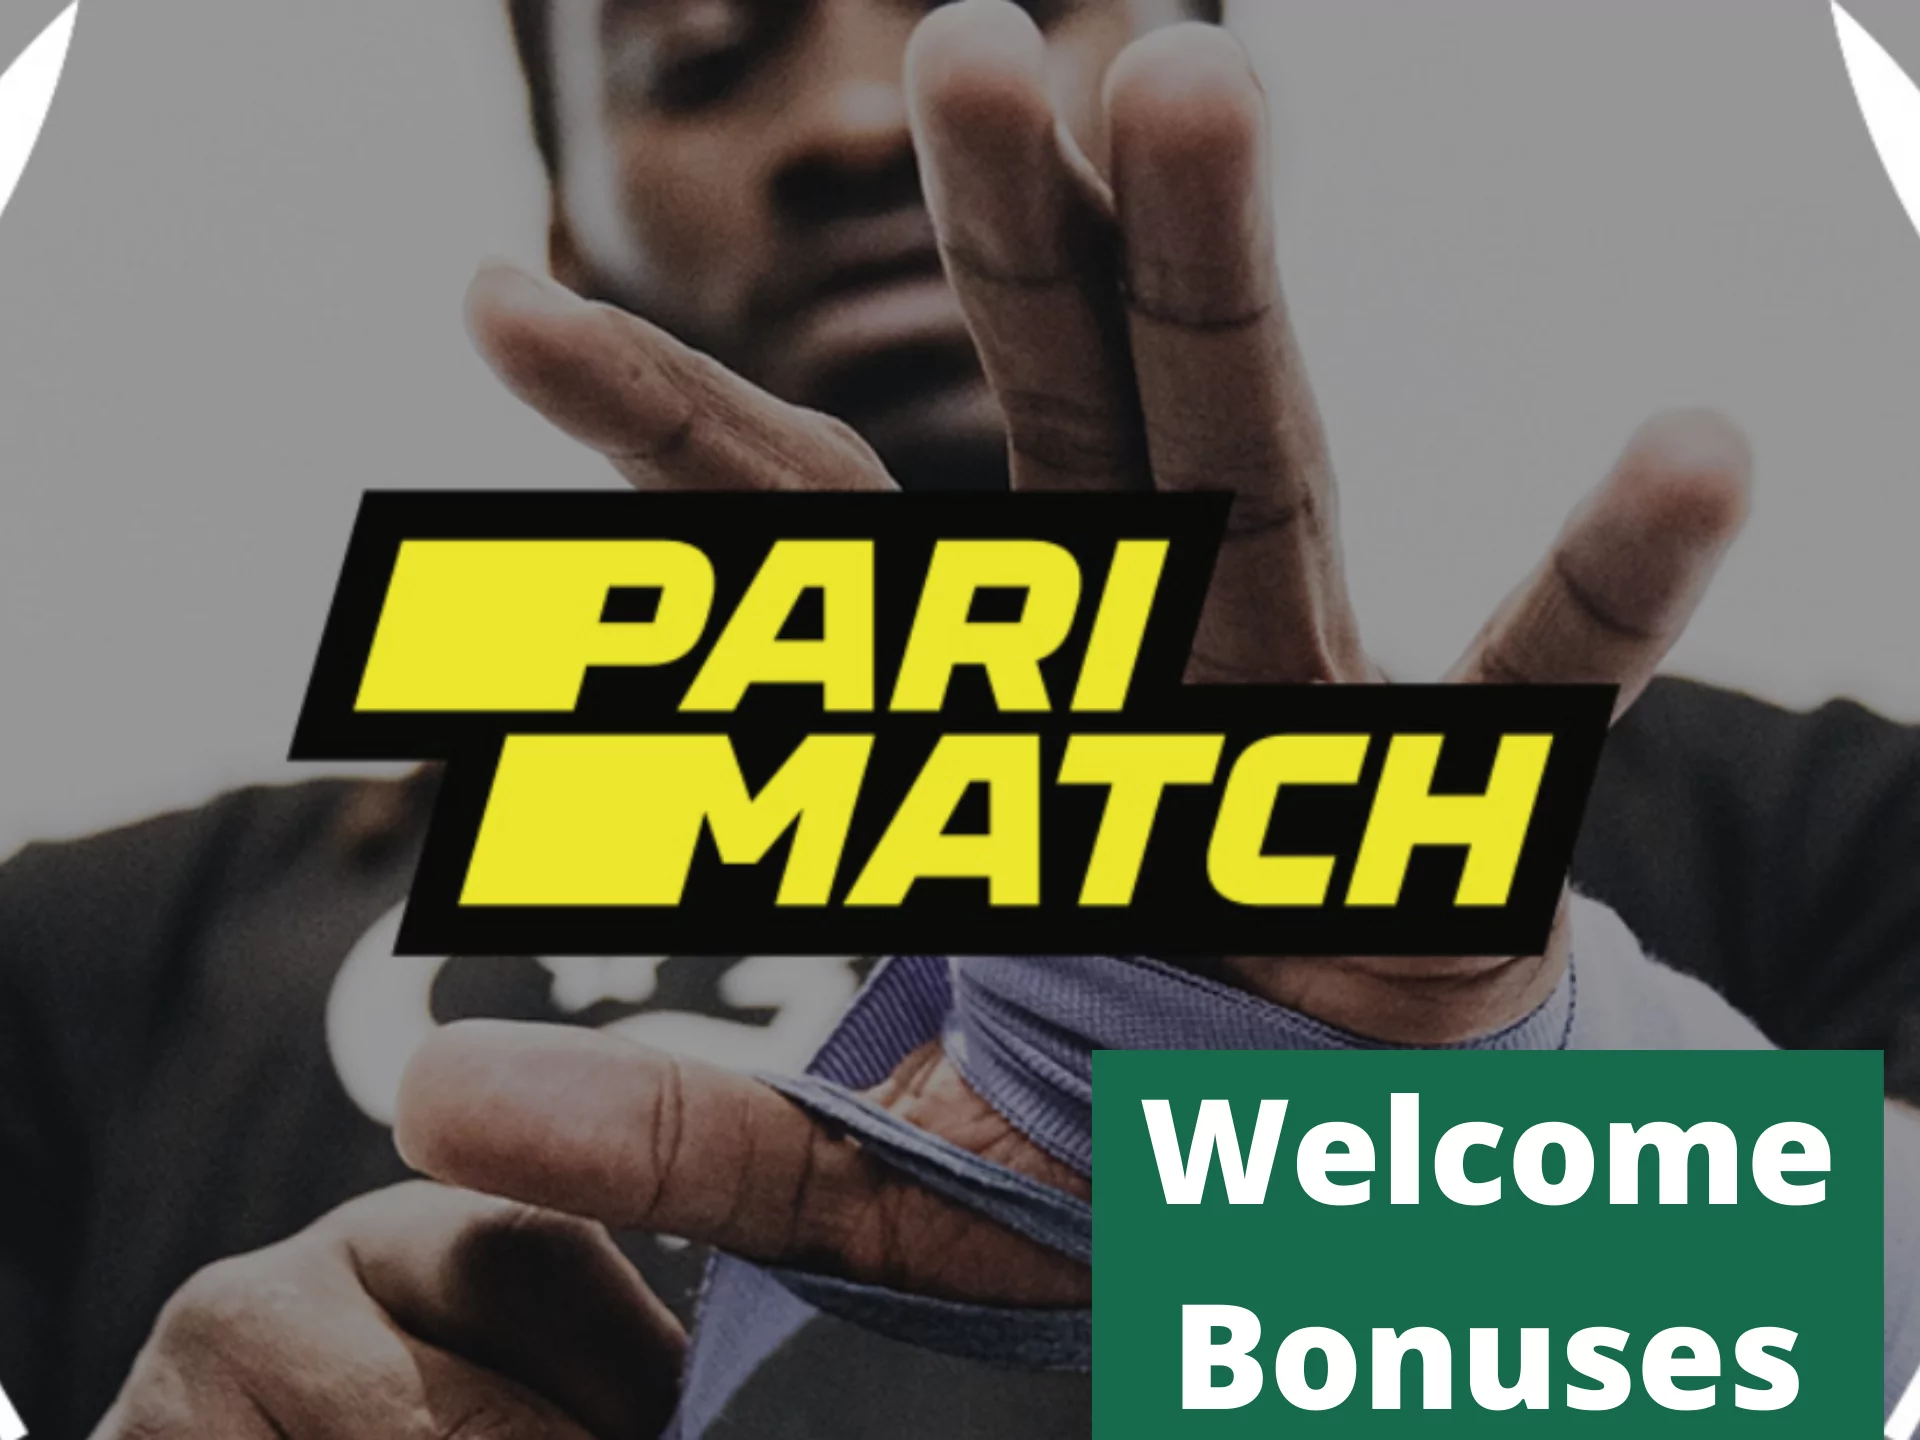 Parimatch app welcome bonus for new customers.